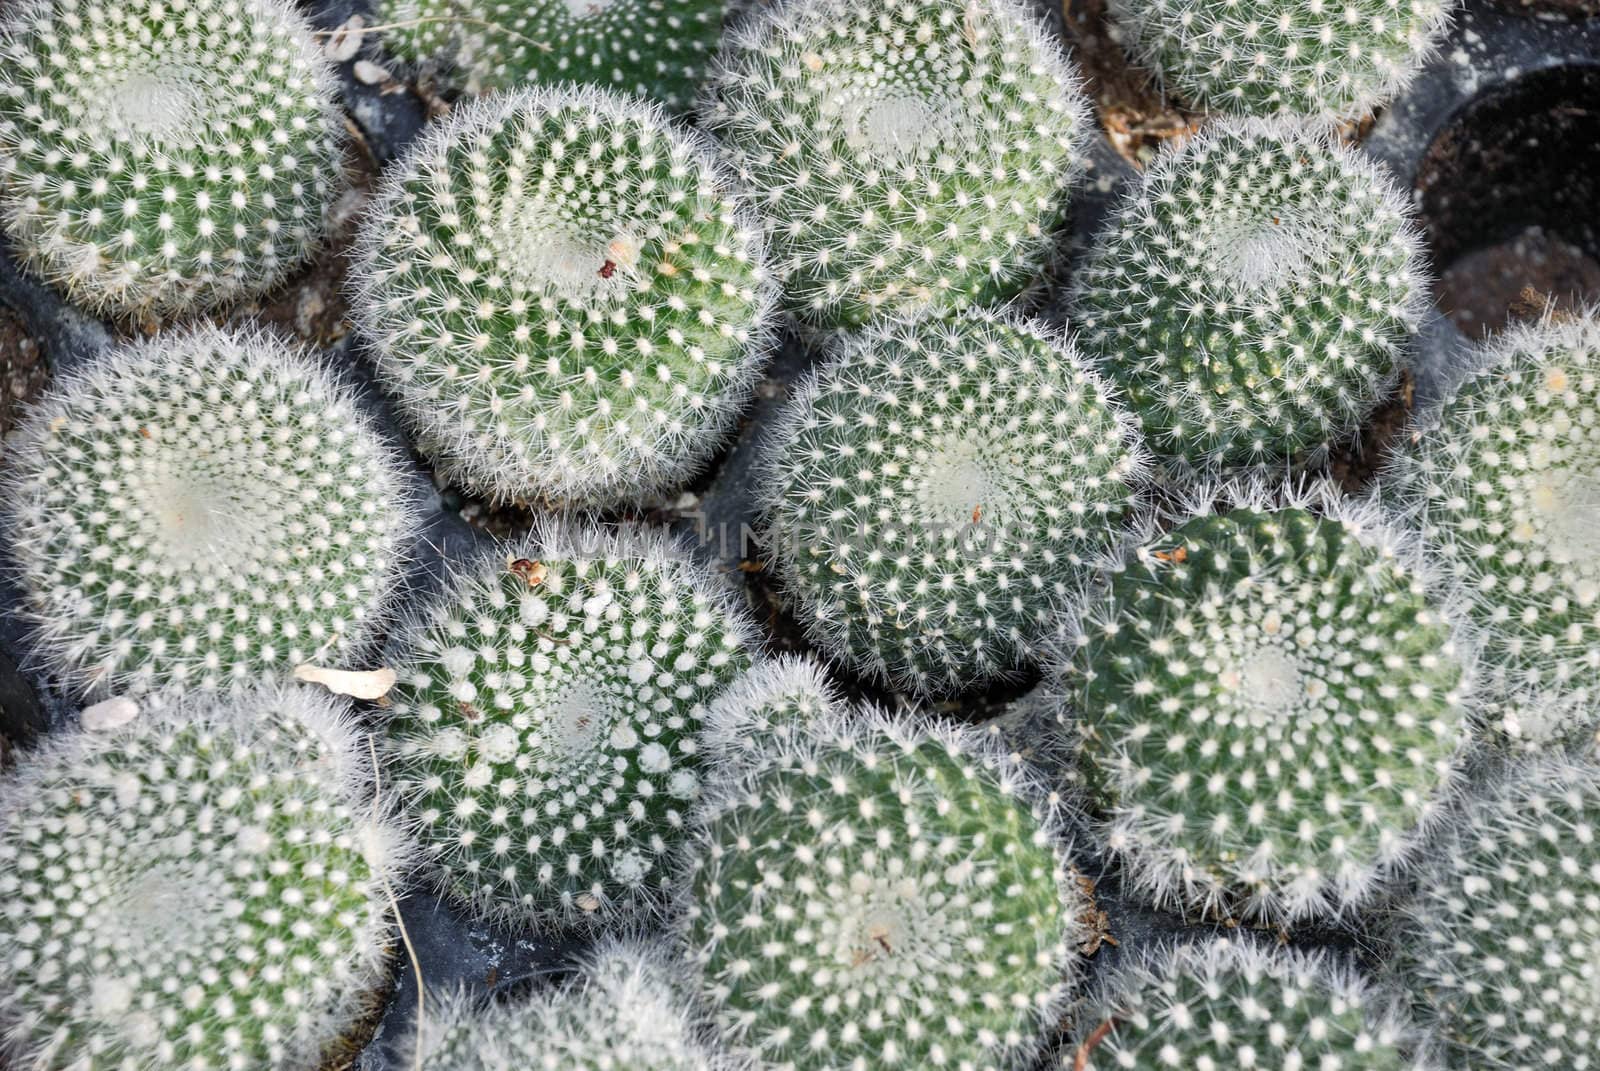 Close-up of a group of small Mammillaria cacti.